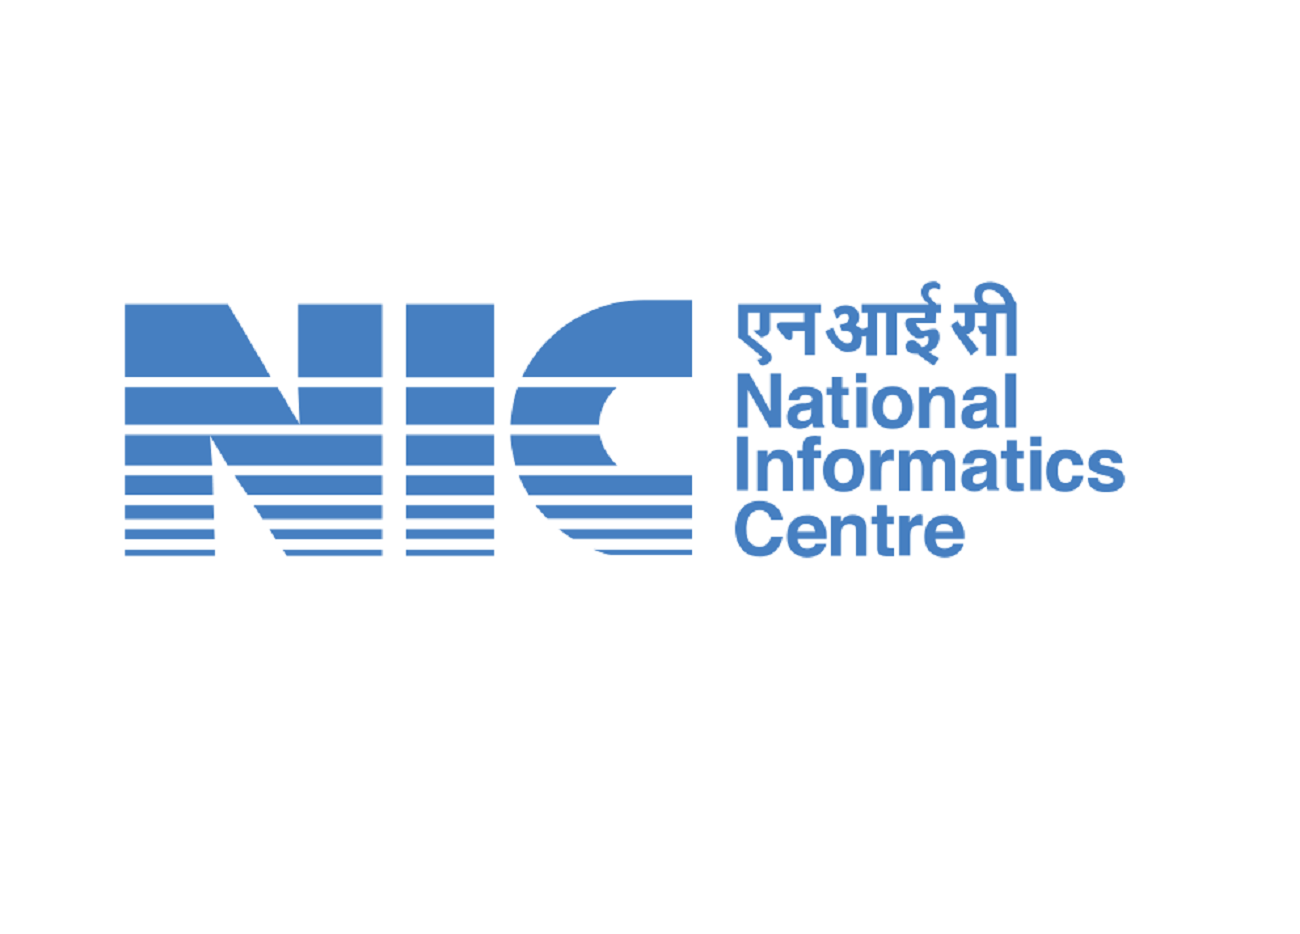 -National Informatics Centre (NIC)